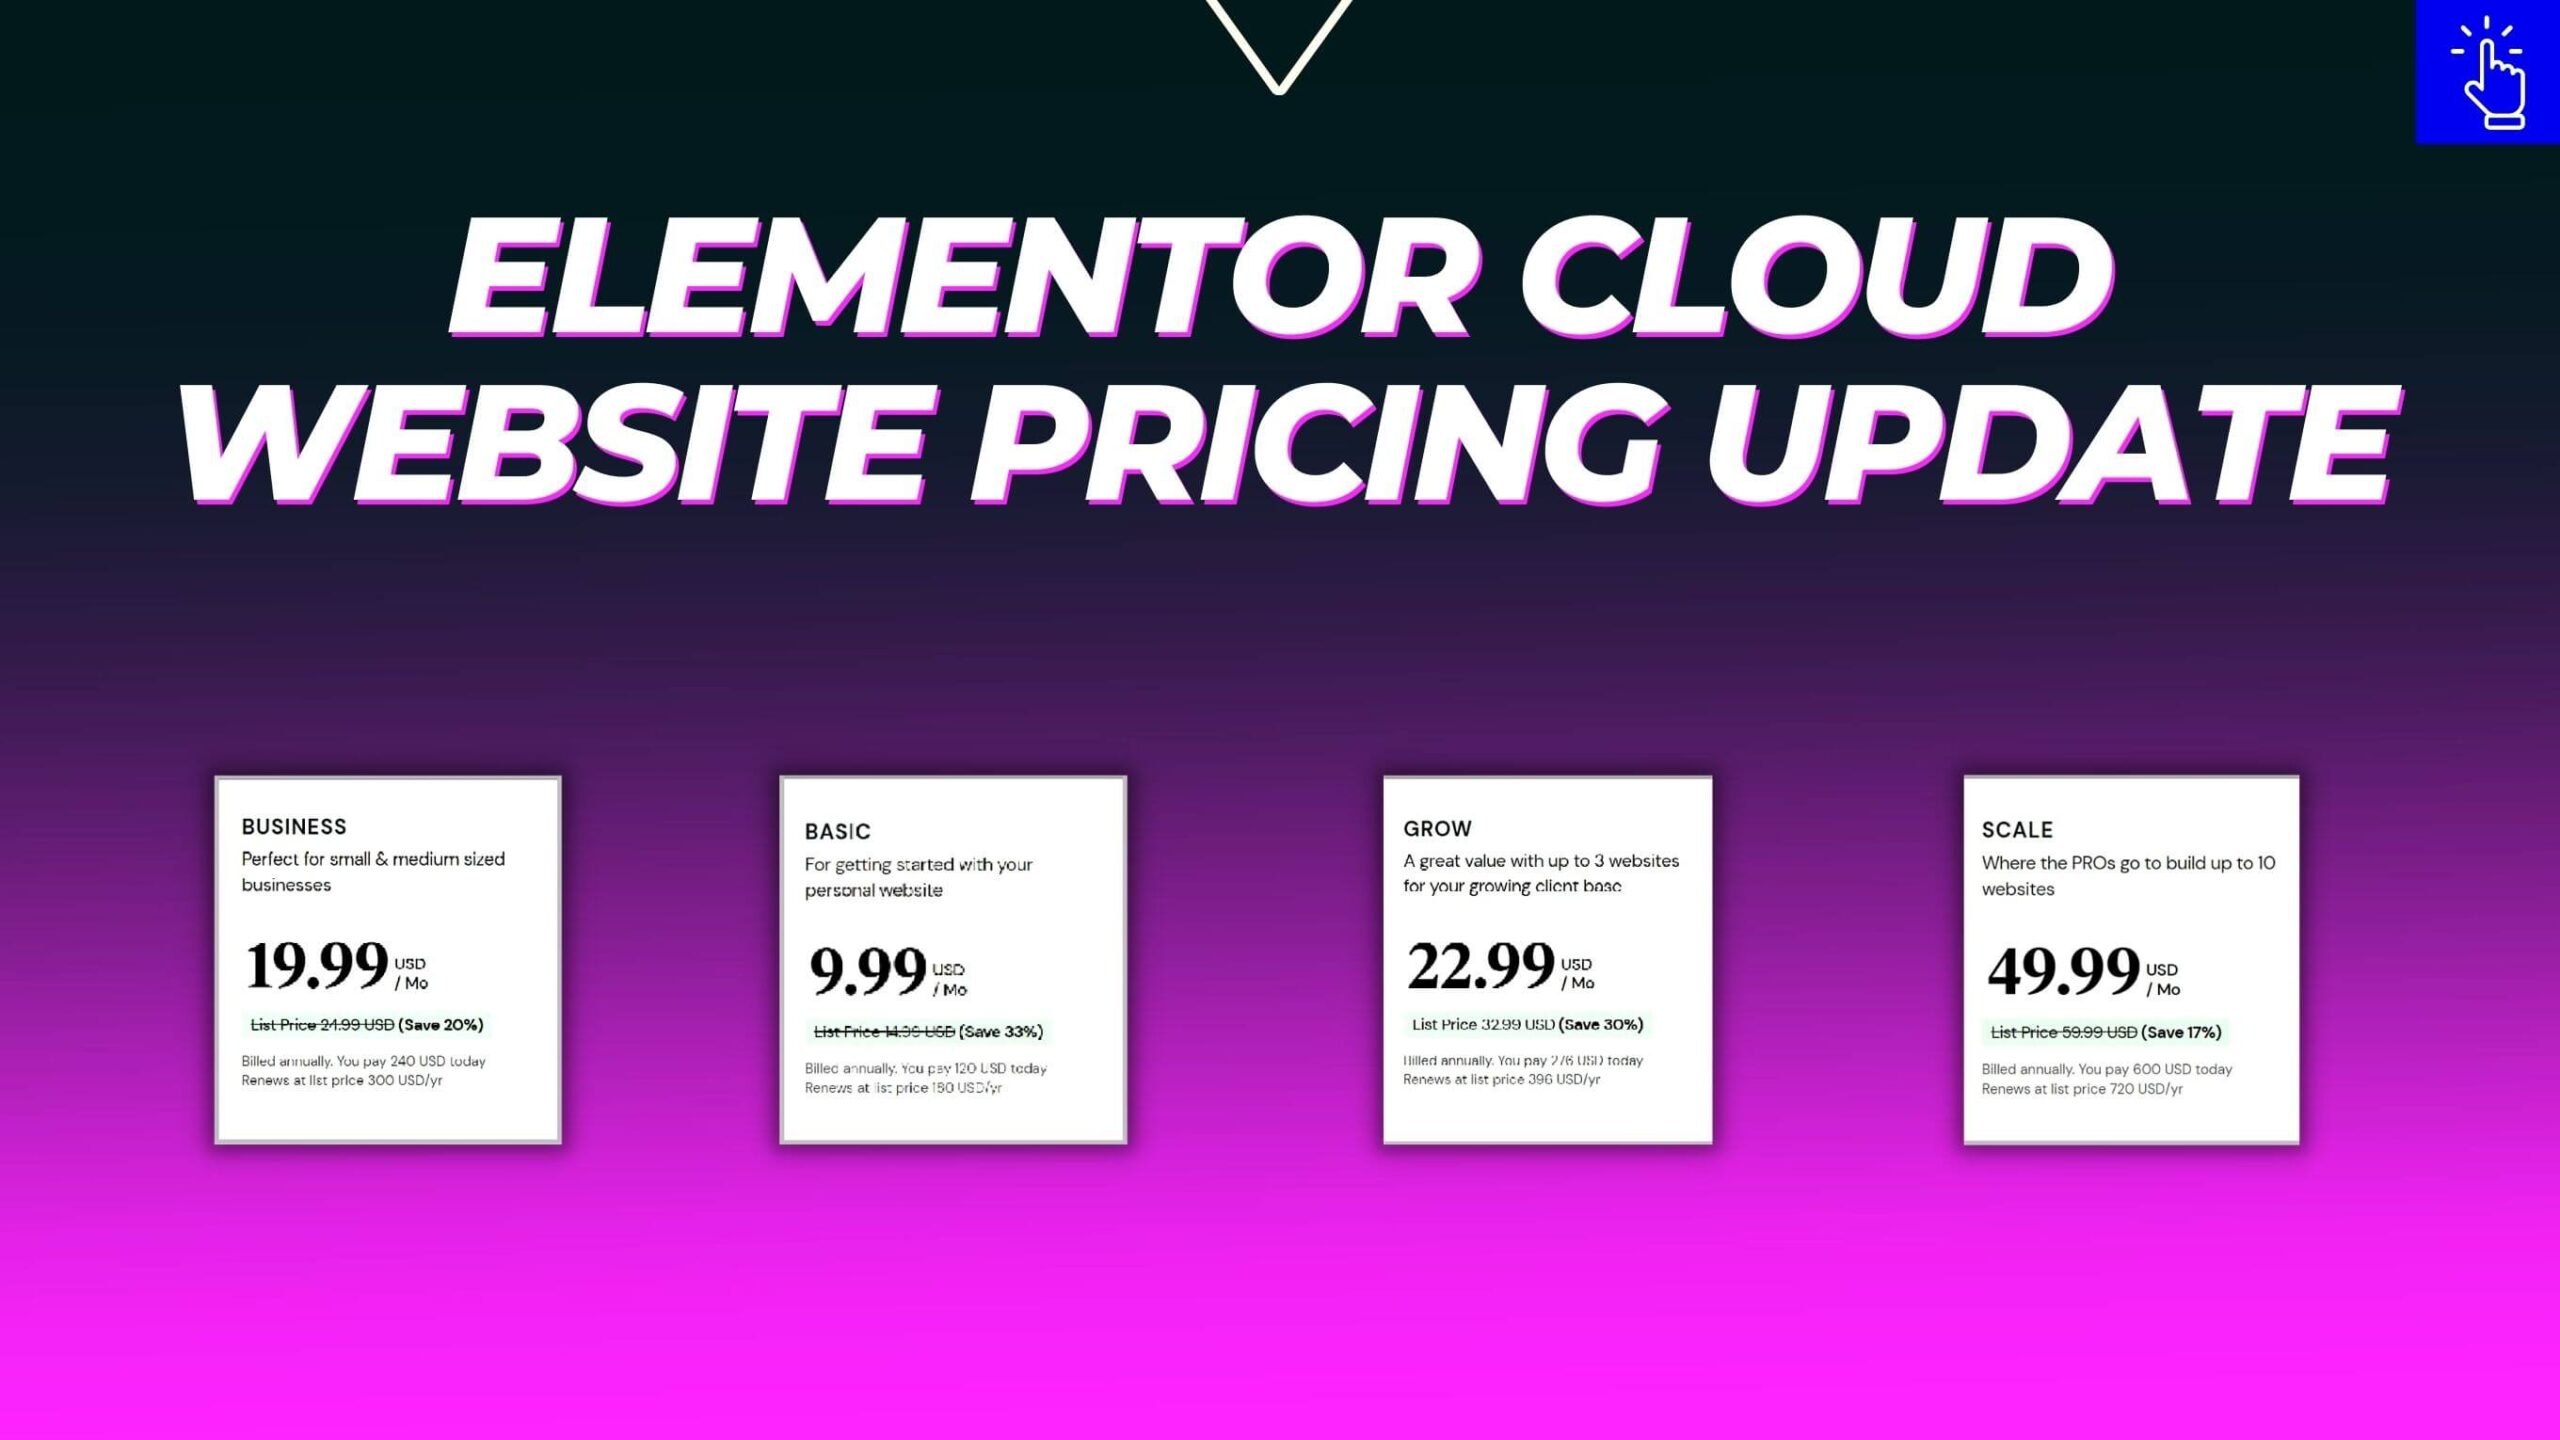 Elementor云网站定价更新-新计划